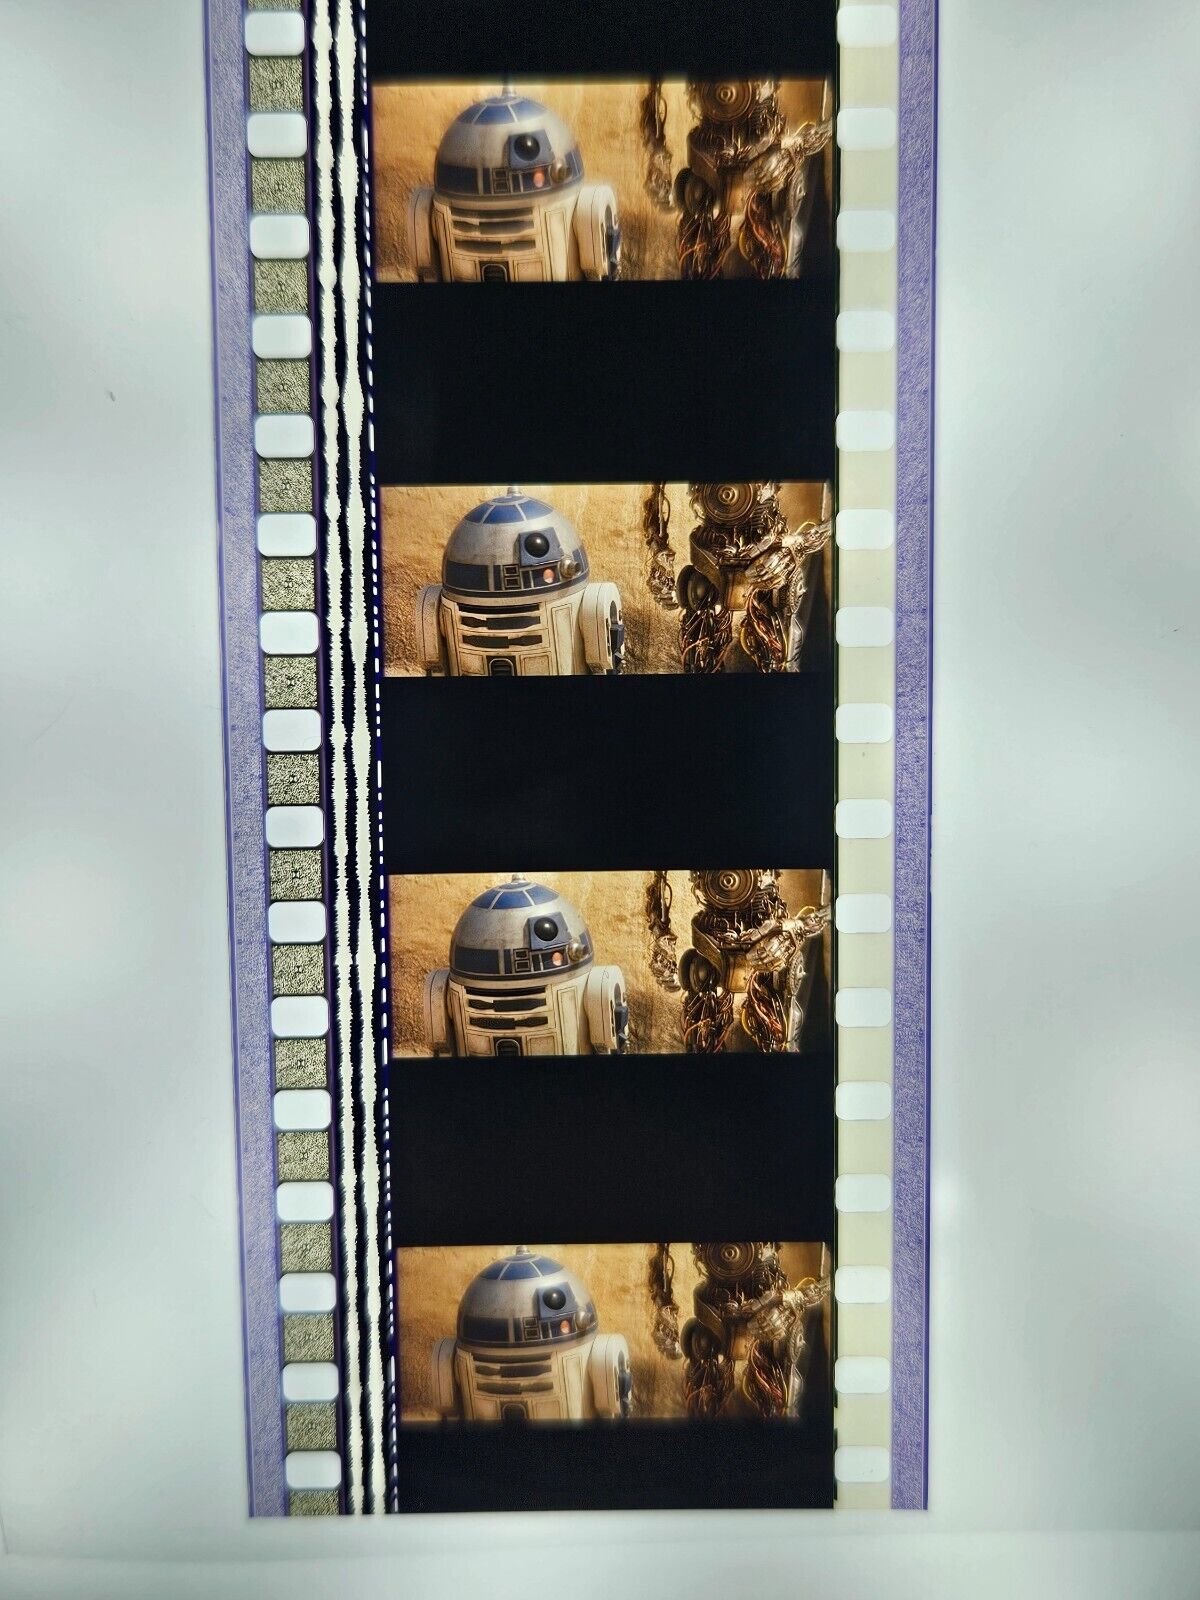 R2-D2 C-3PO Star Wars Episode 1 Phantom Menace 35mm Original Film Cells SW2097 Star Wars 35mm Film Cell - Hobby Gems